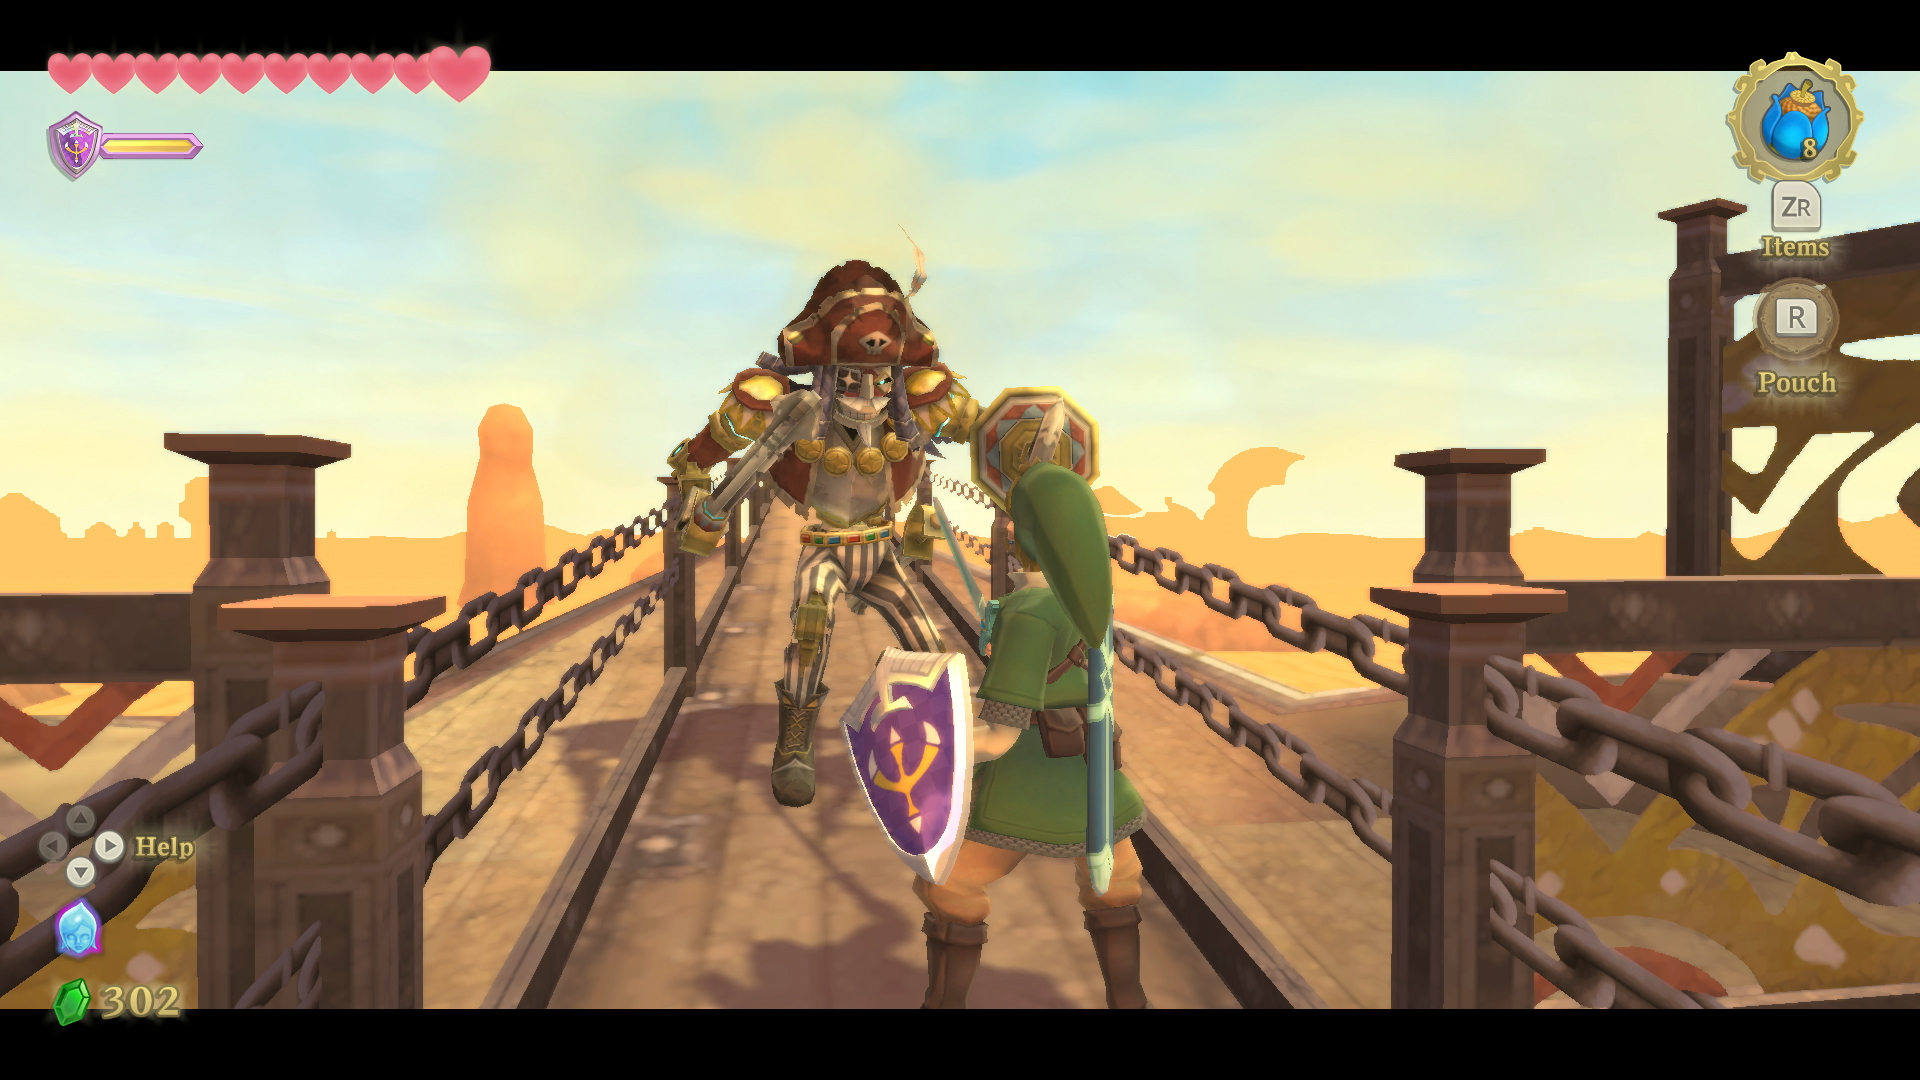 Legend of Zelda: Skyward Sword HD - Nintendo Switch